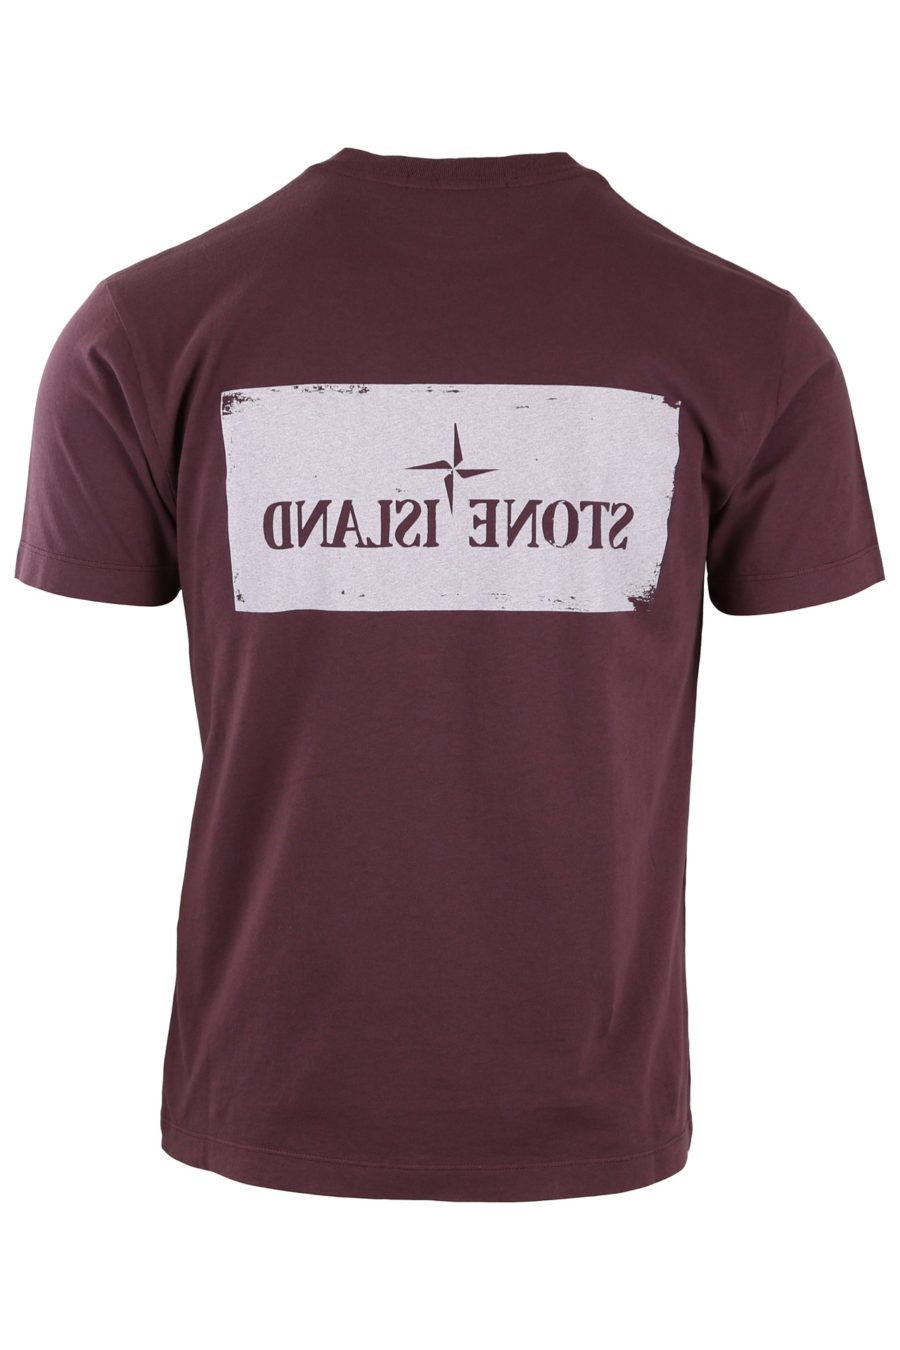 T-Shirt Stone Island burgundy logo weiß - fdc1cd0f460d93cd830f3093410841232570a244